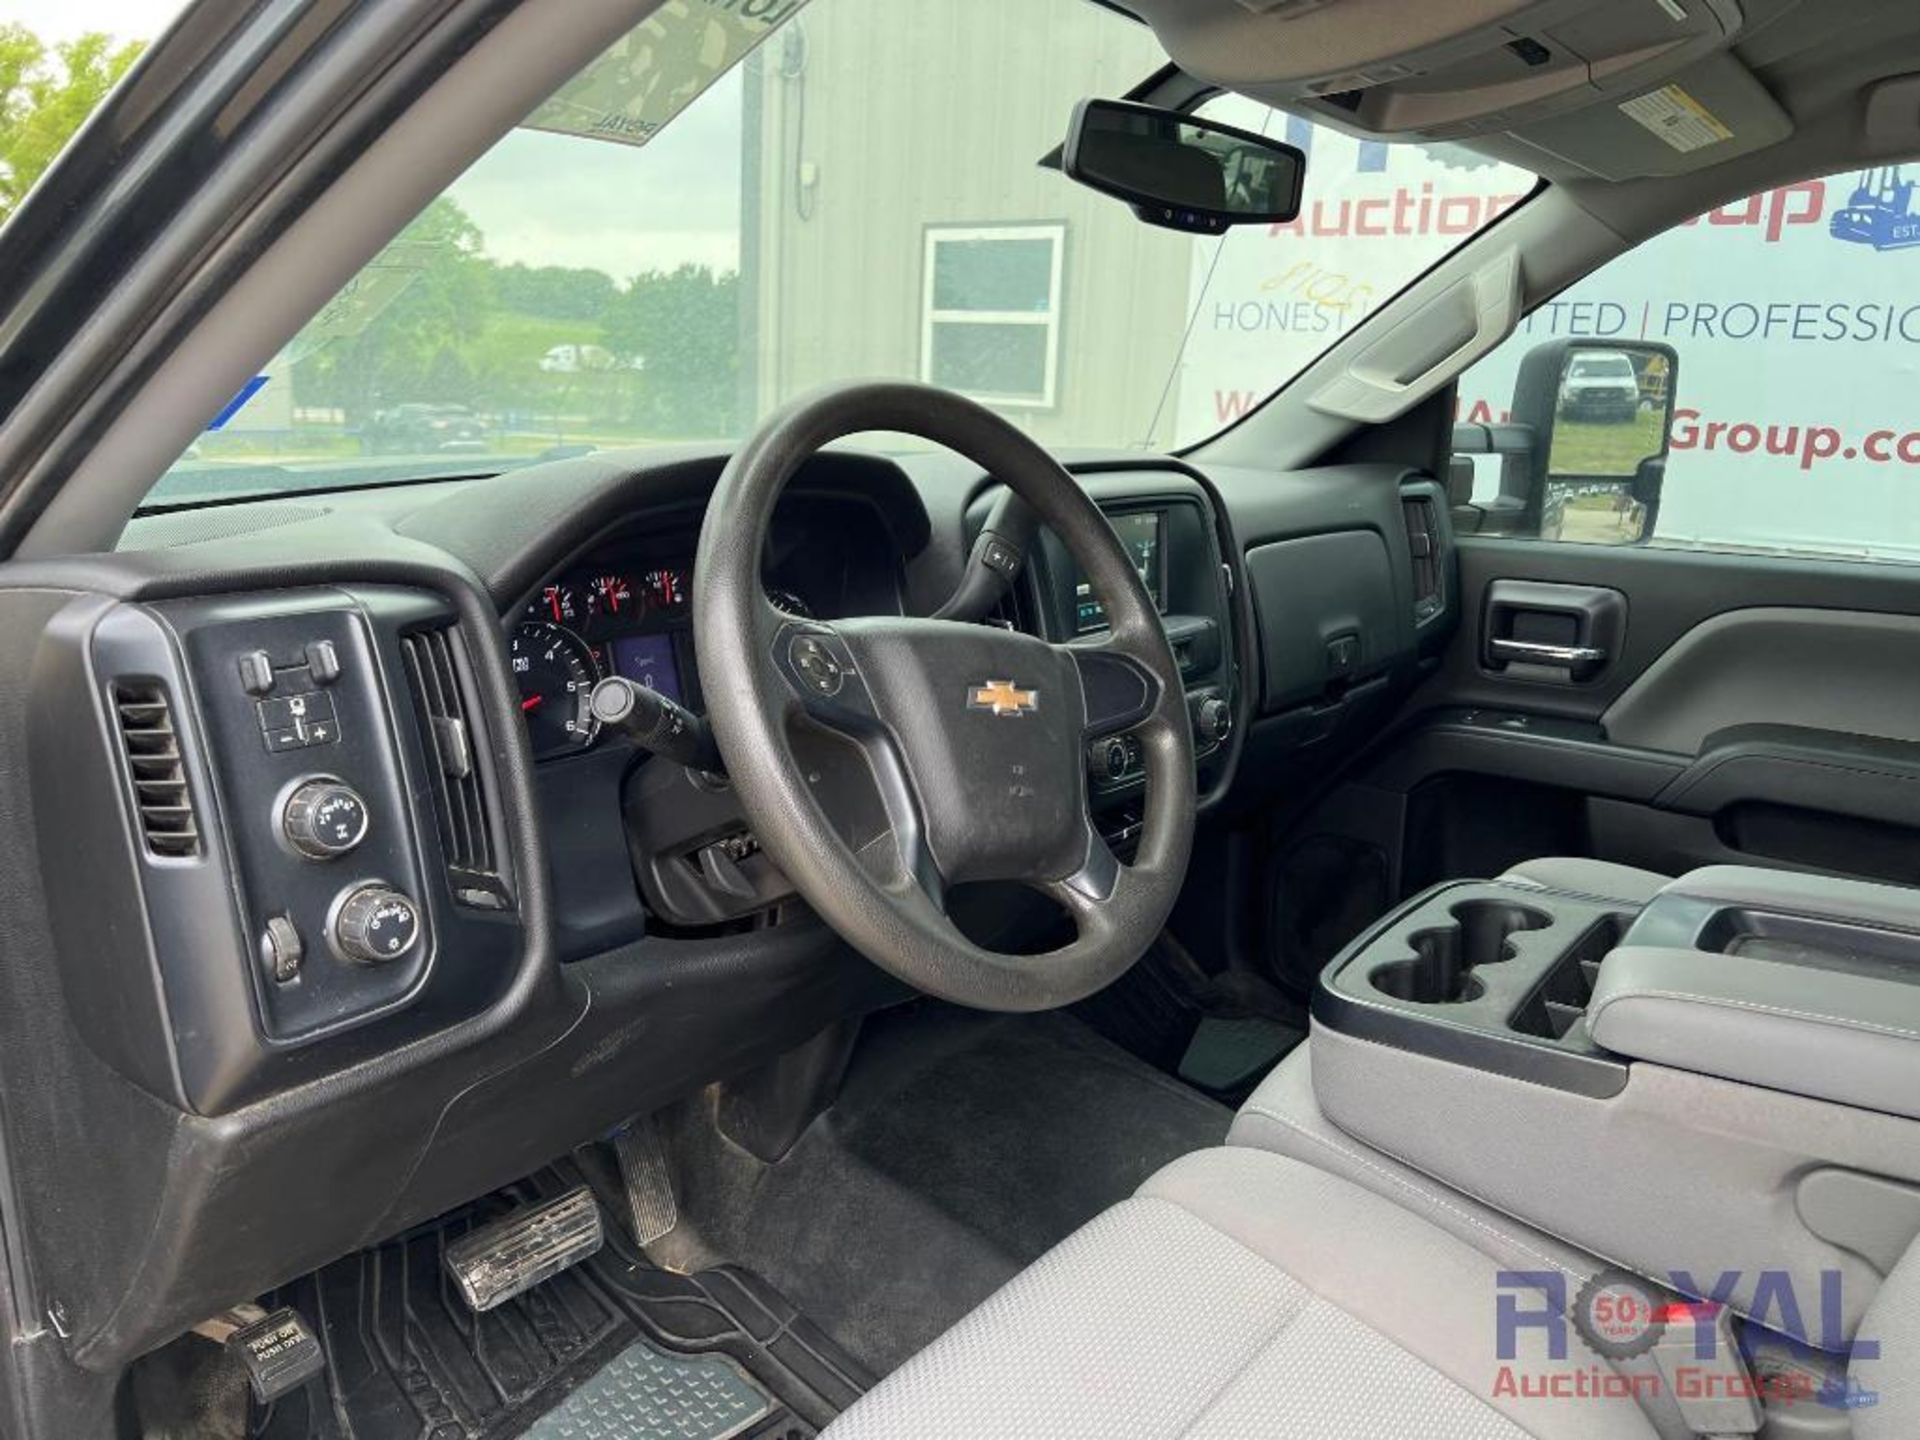 2018 Chevrolet Silverado 4x4 Crew Cab Pickup Truck - Image 18 of 51